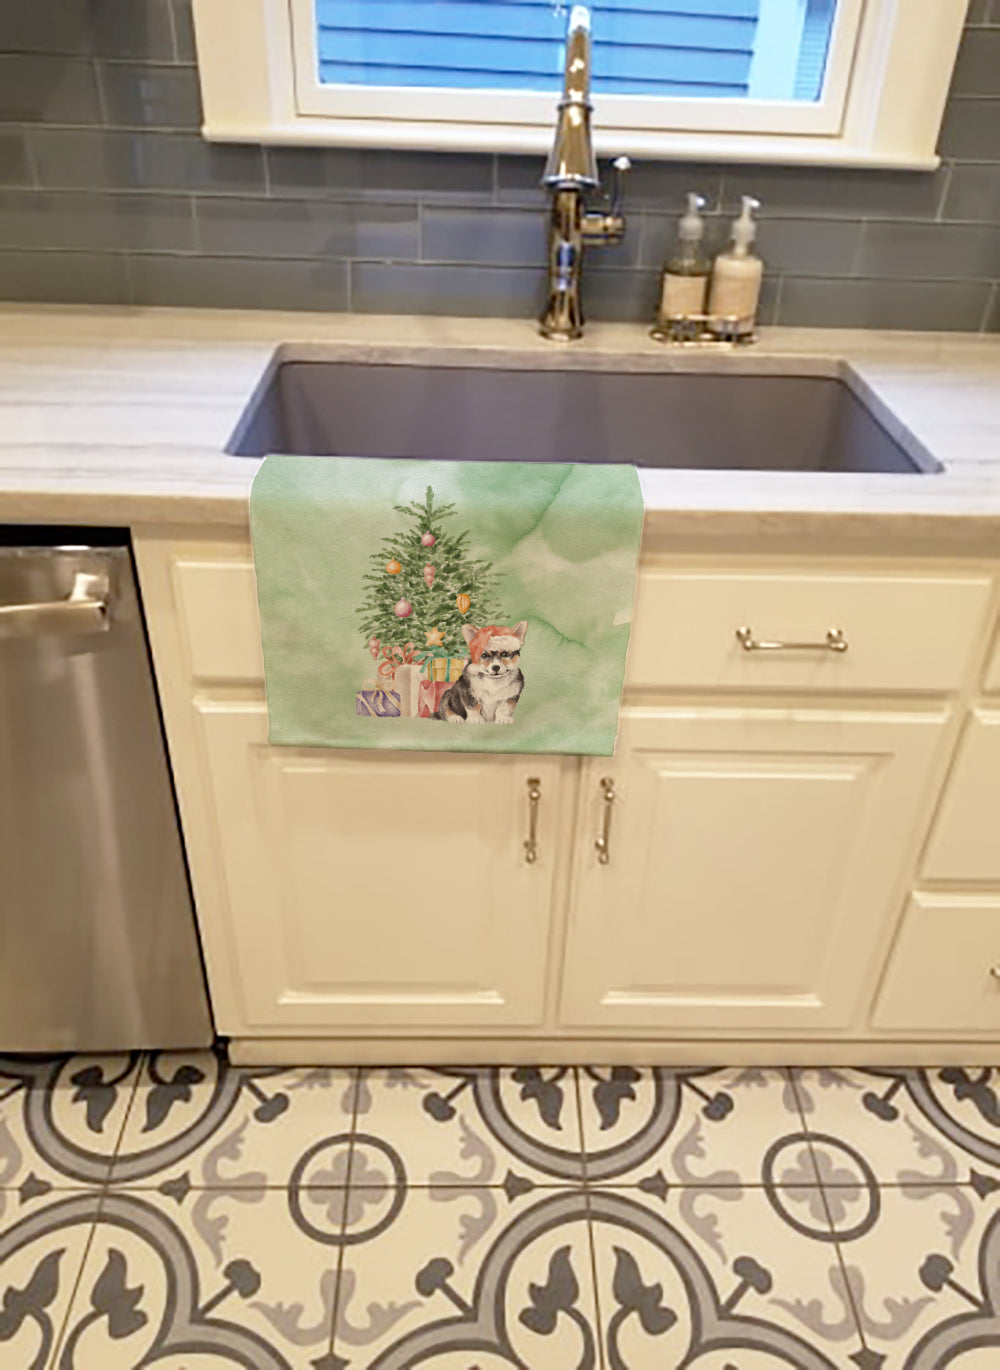 Buy this Christmas Corgi Puppy Kitchen Towel